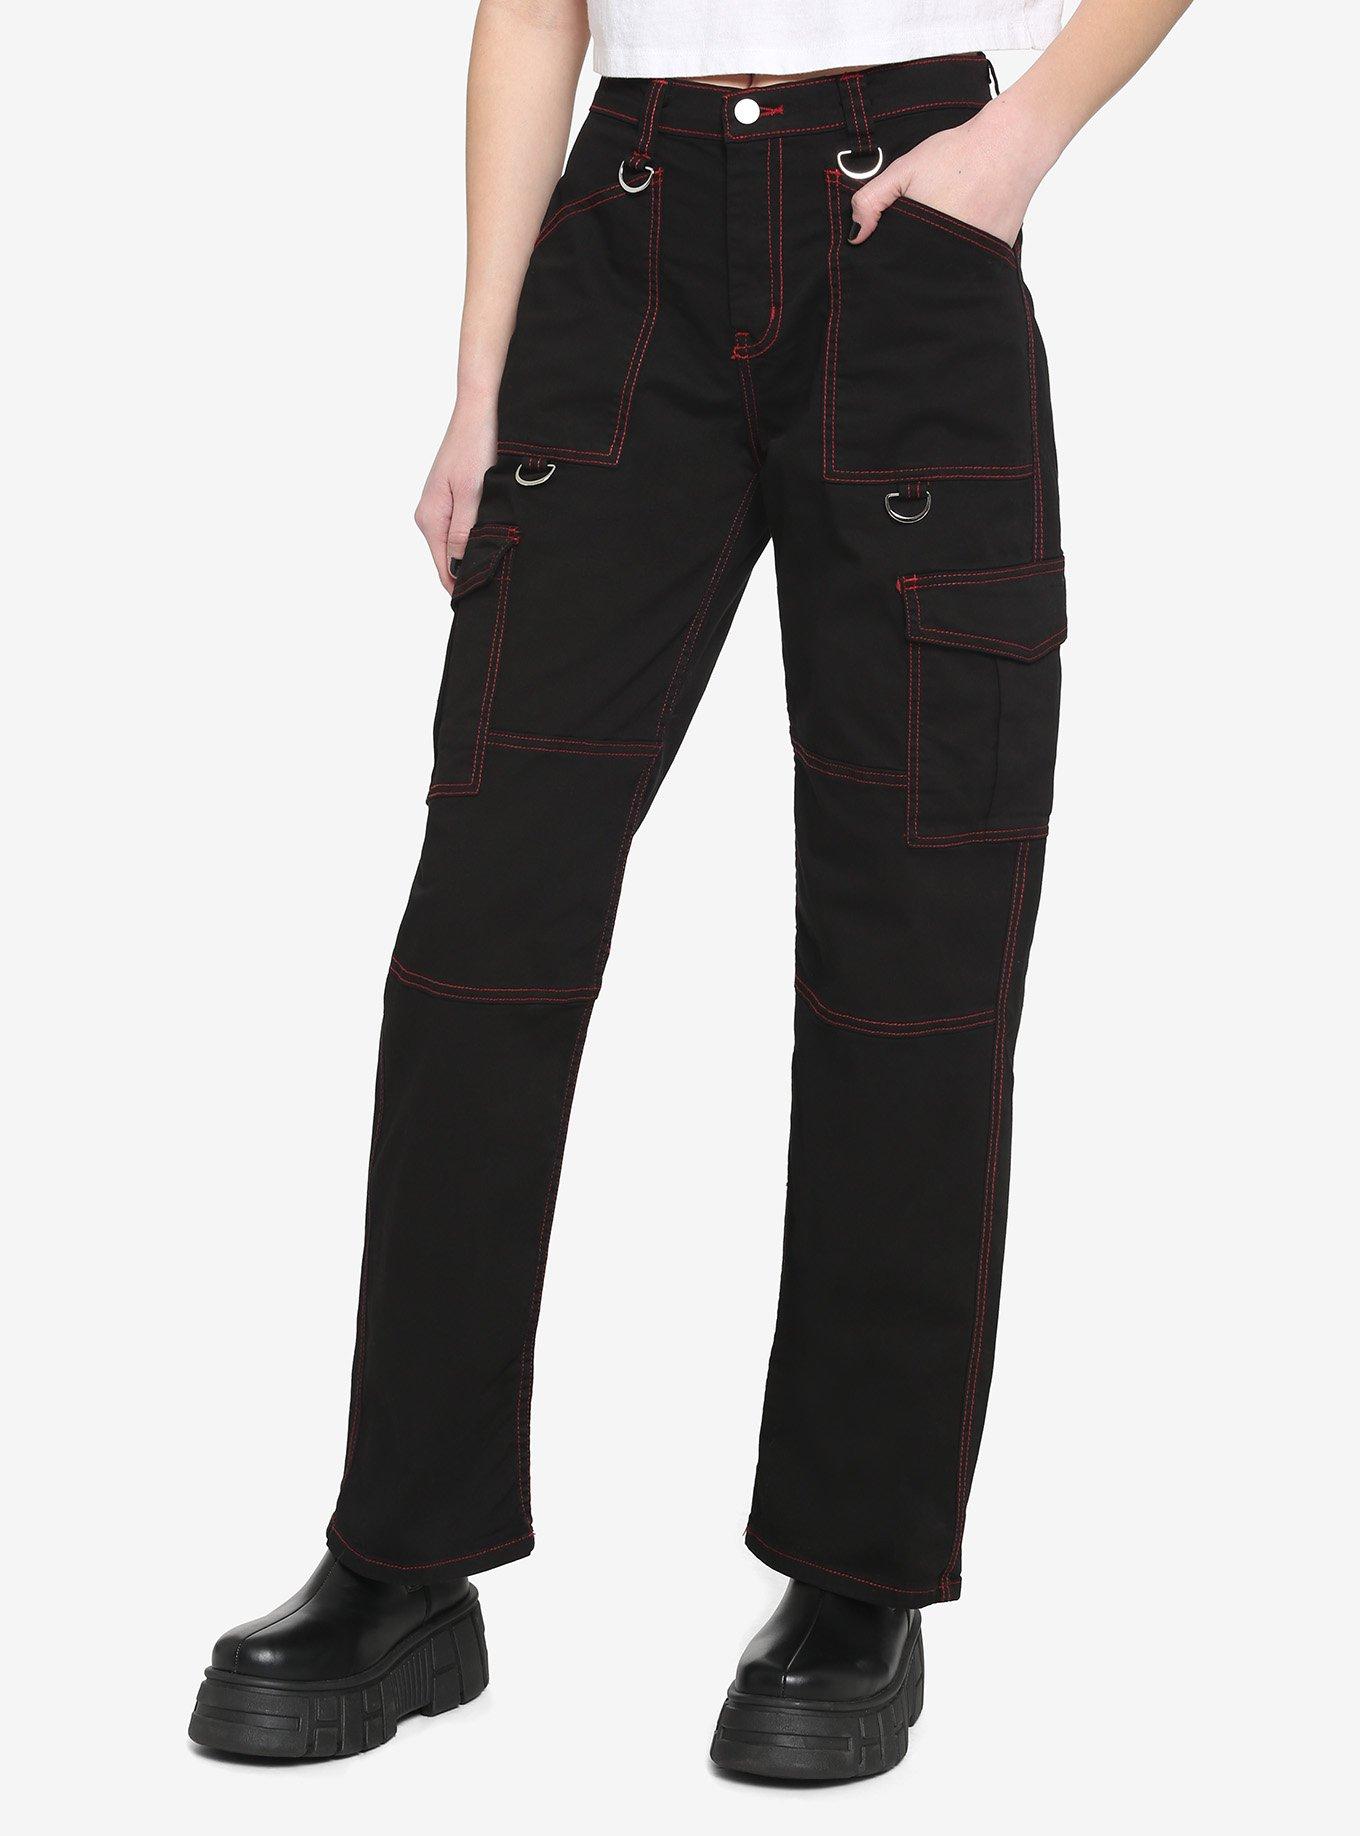 Hot Topic Black & Pink Contrast Stitch Carpenter Pants Plus